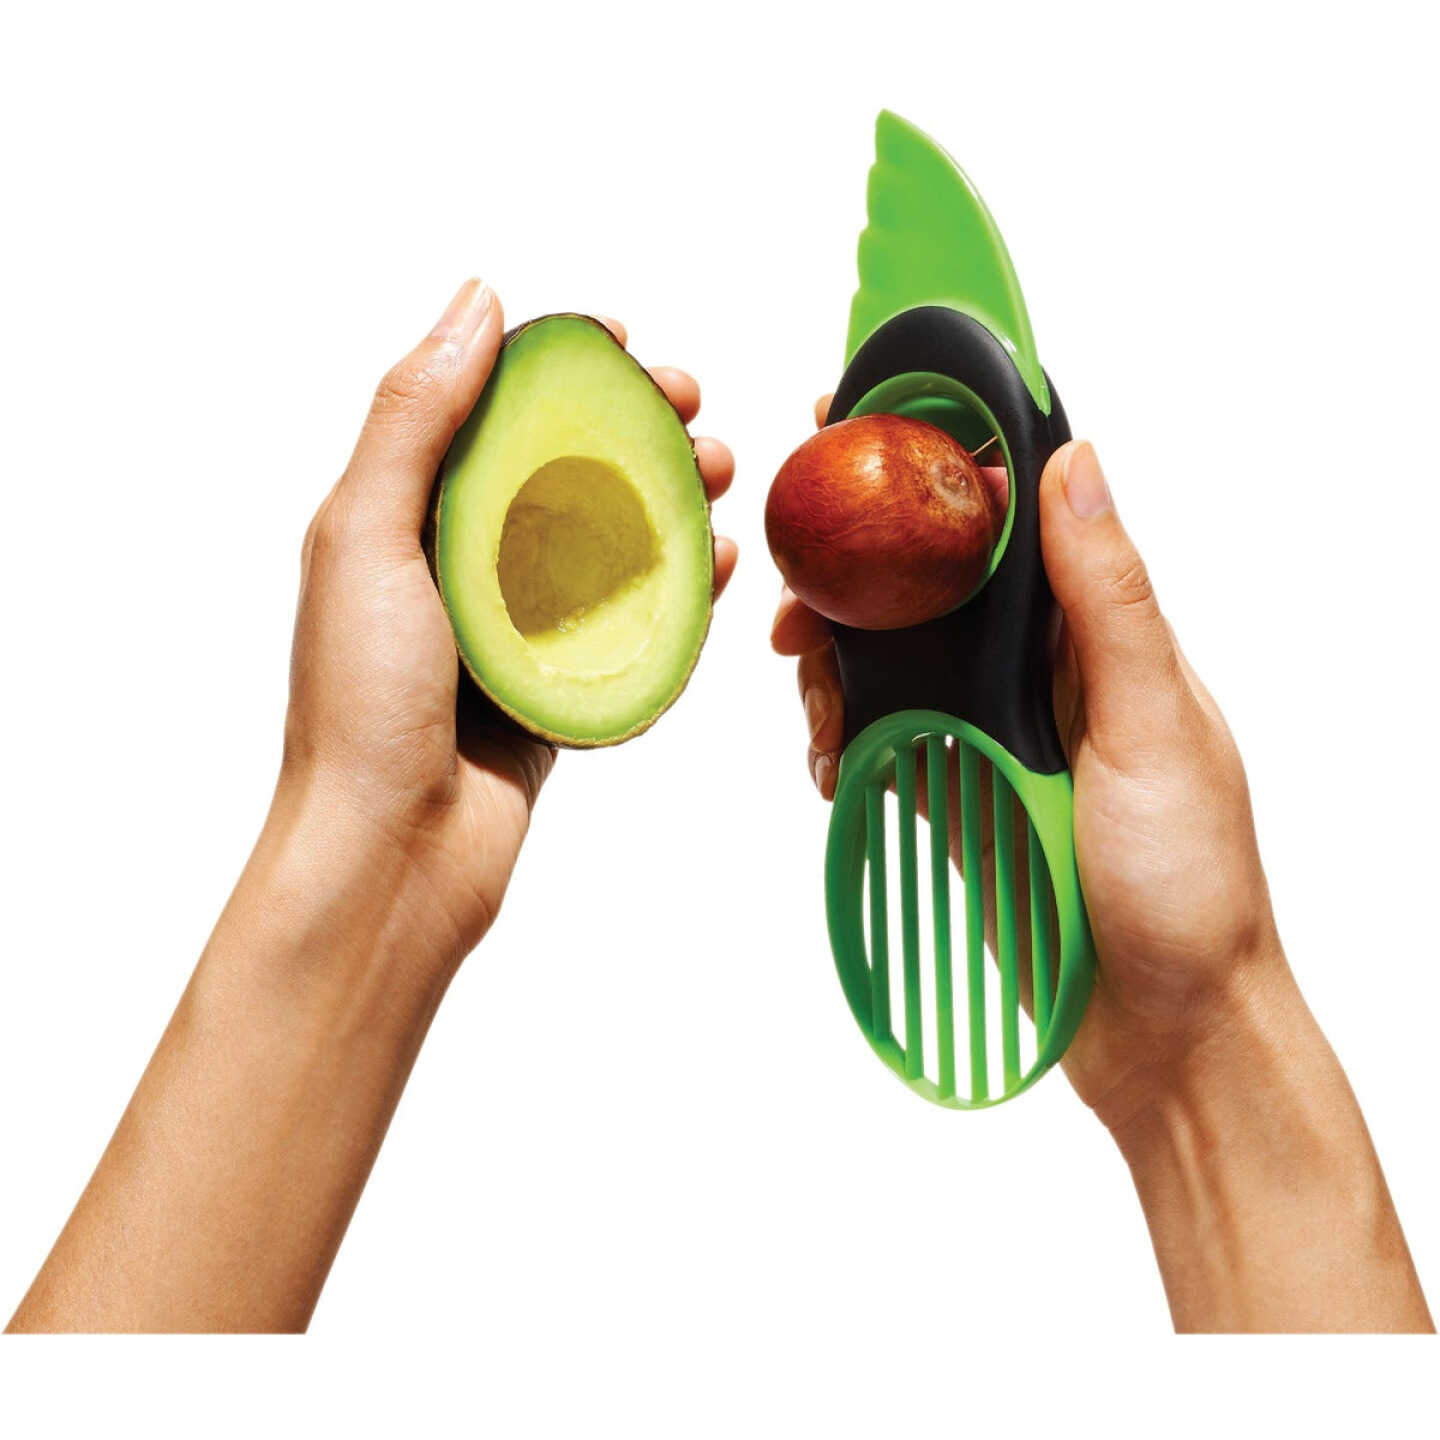 OXO Good Grips 3-in-1 Avocado Slicer - Green & Scoop and Smash Good Grips  Avocado Tool, Masher, Black